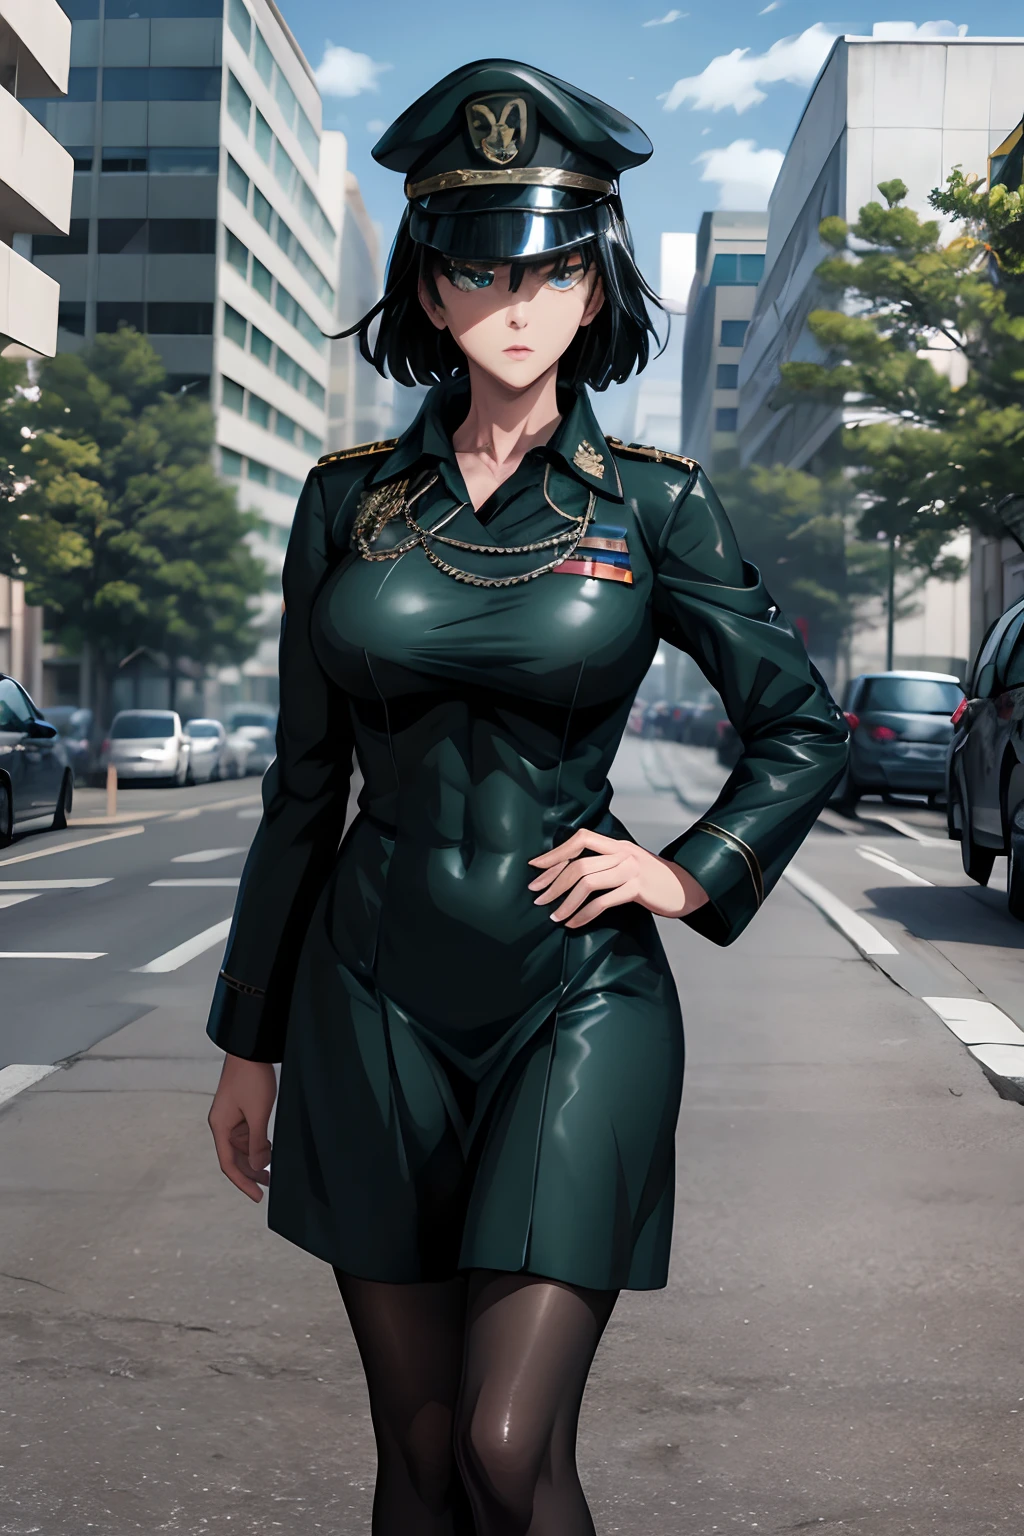 Fubuki vestida con military dress uniform, black uniform, military cap, military dress uniform, black overcoat, black boots, peeping at the viewer